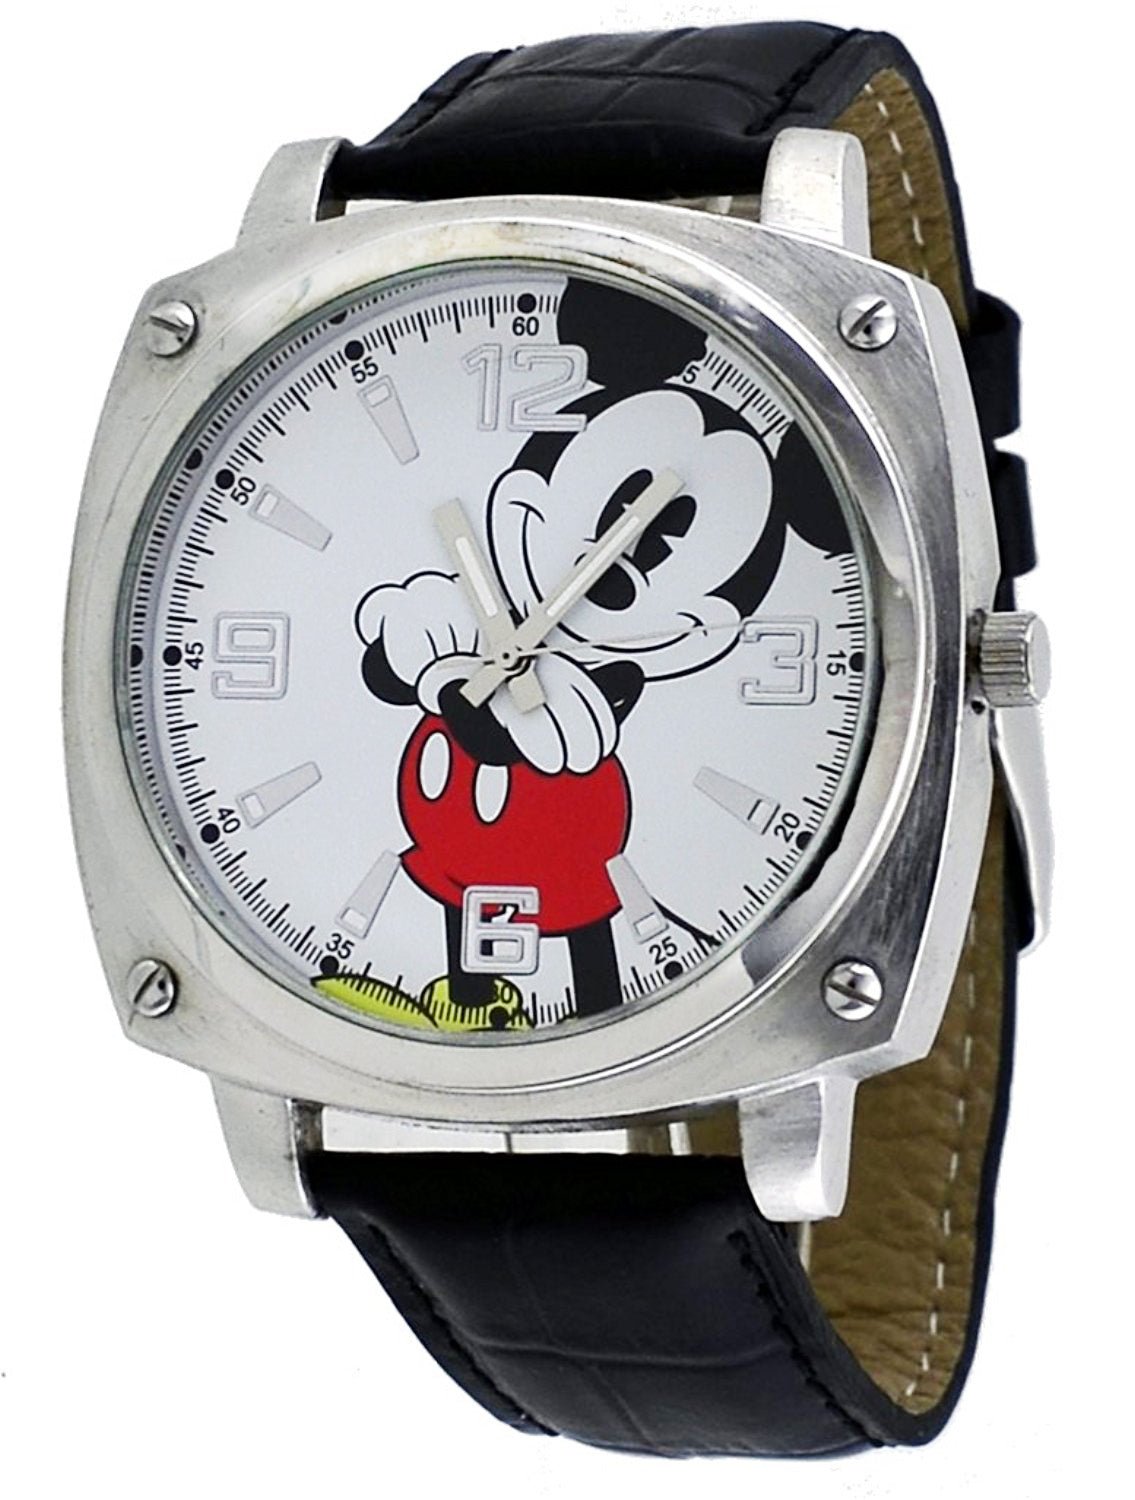 Model: Men's Disney Jumbo Mickey Mouse Analog Watch with Black Strap